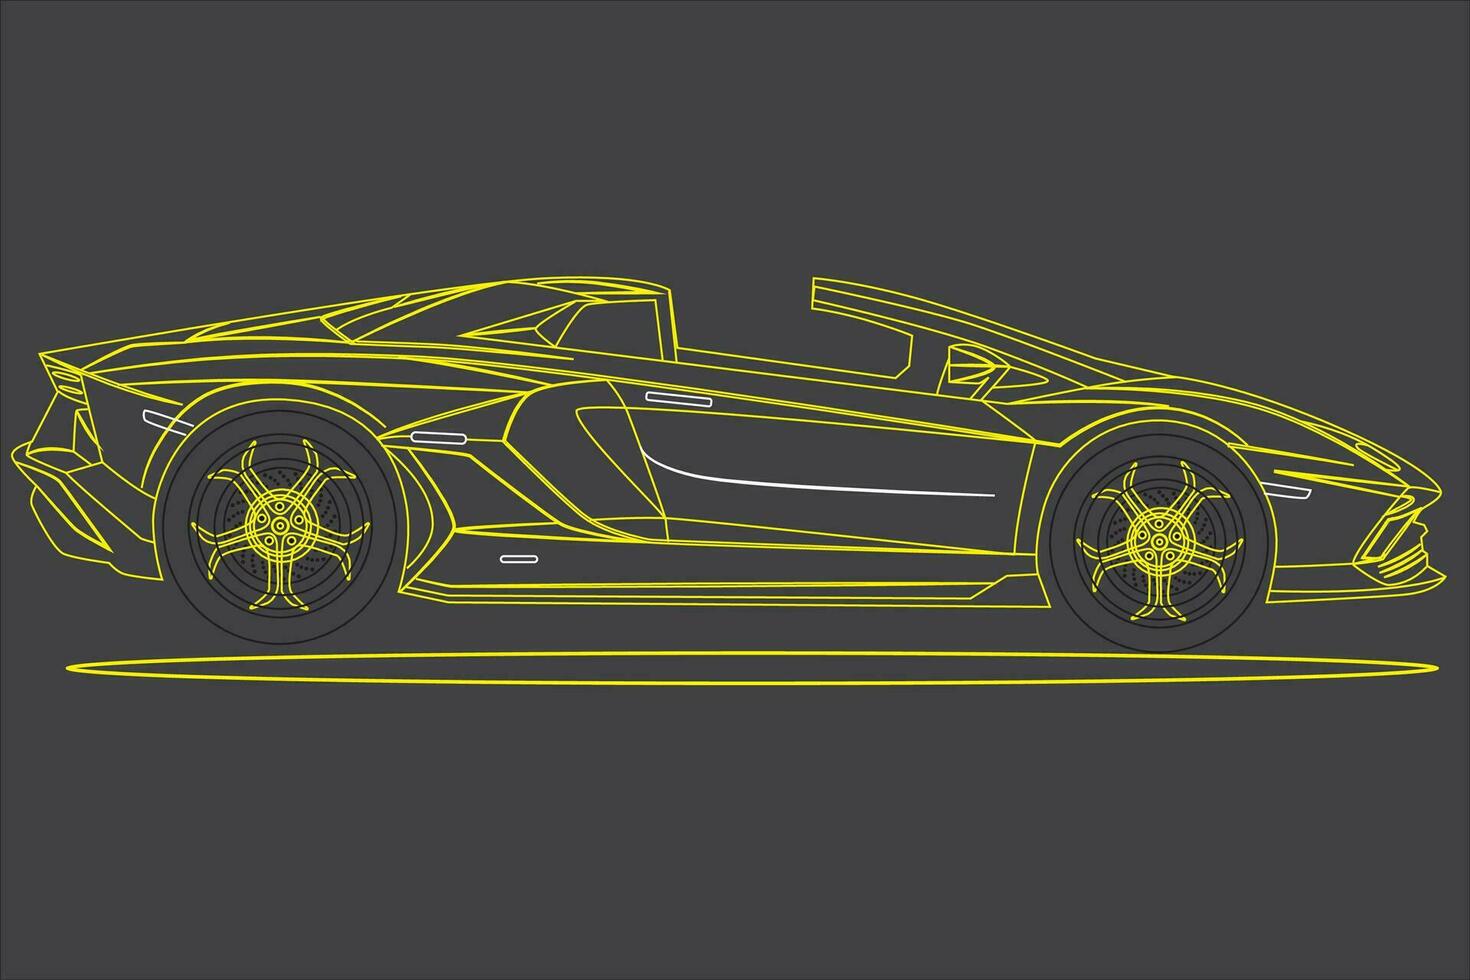 Deportes coche silueta aislado en blanco antecedentes. Deportes coche lado vista. amarillo línea Arte diseño modelo. vector ilustración.